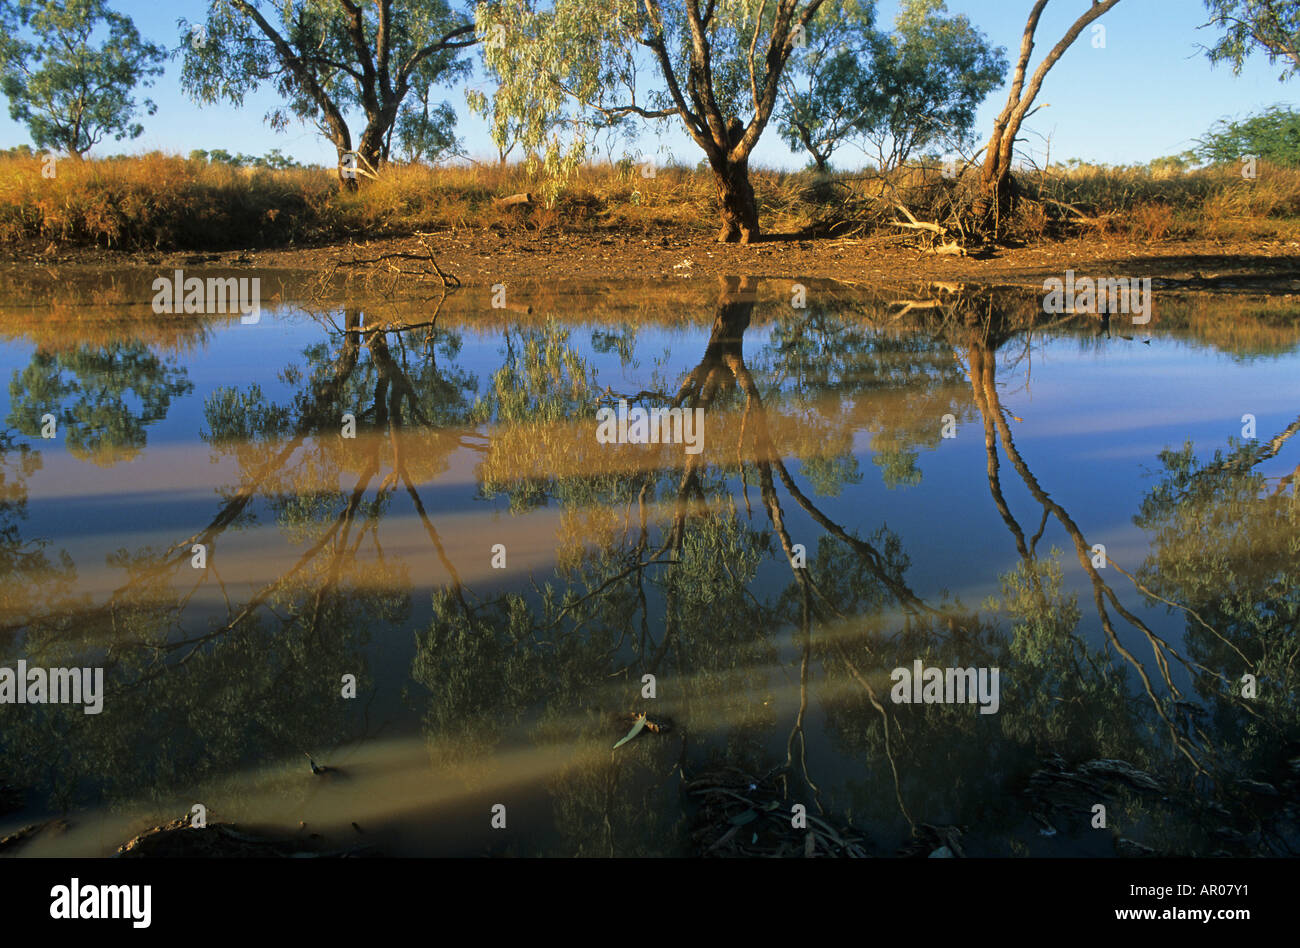 Billabong, Flussarm, Matilda Highway, Australien, Qld, Matilda Hwy, o Swagman wanderer campi da un billabong o waterhole, Austr Foto Stock